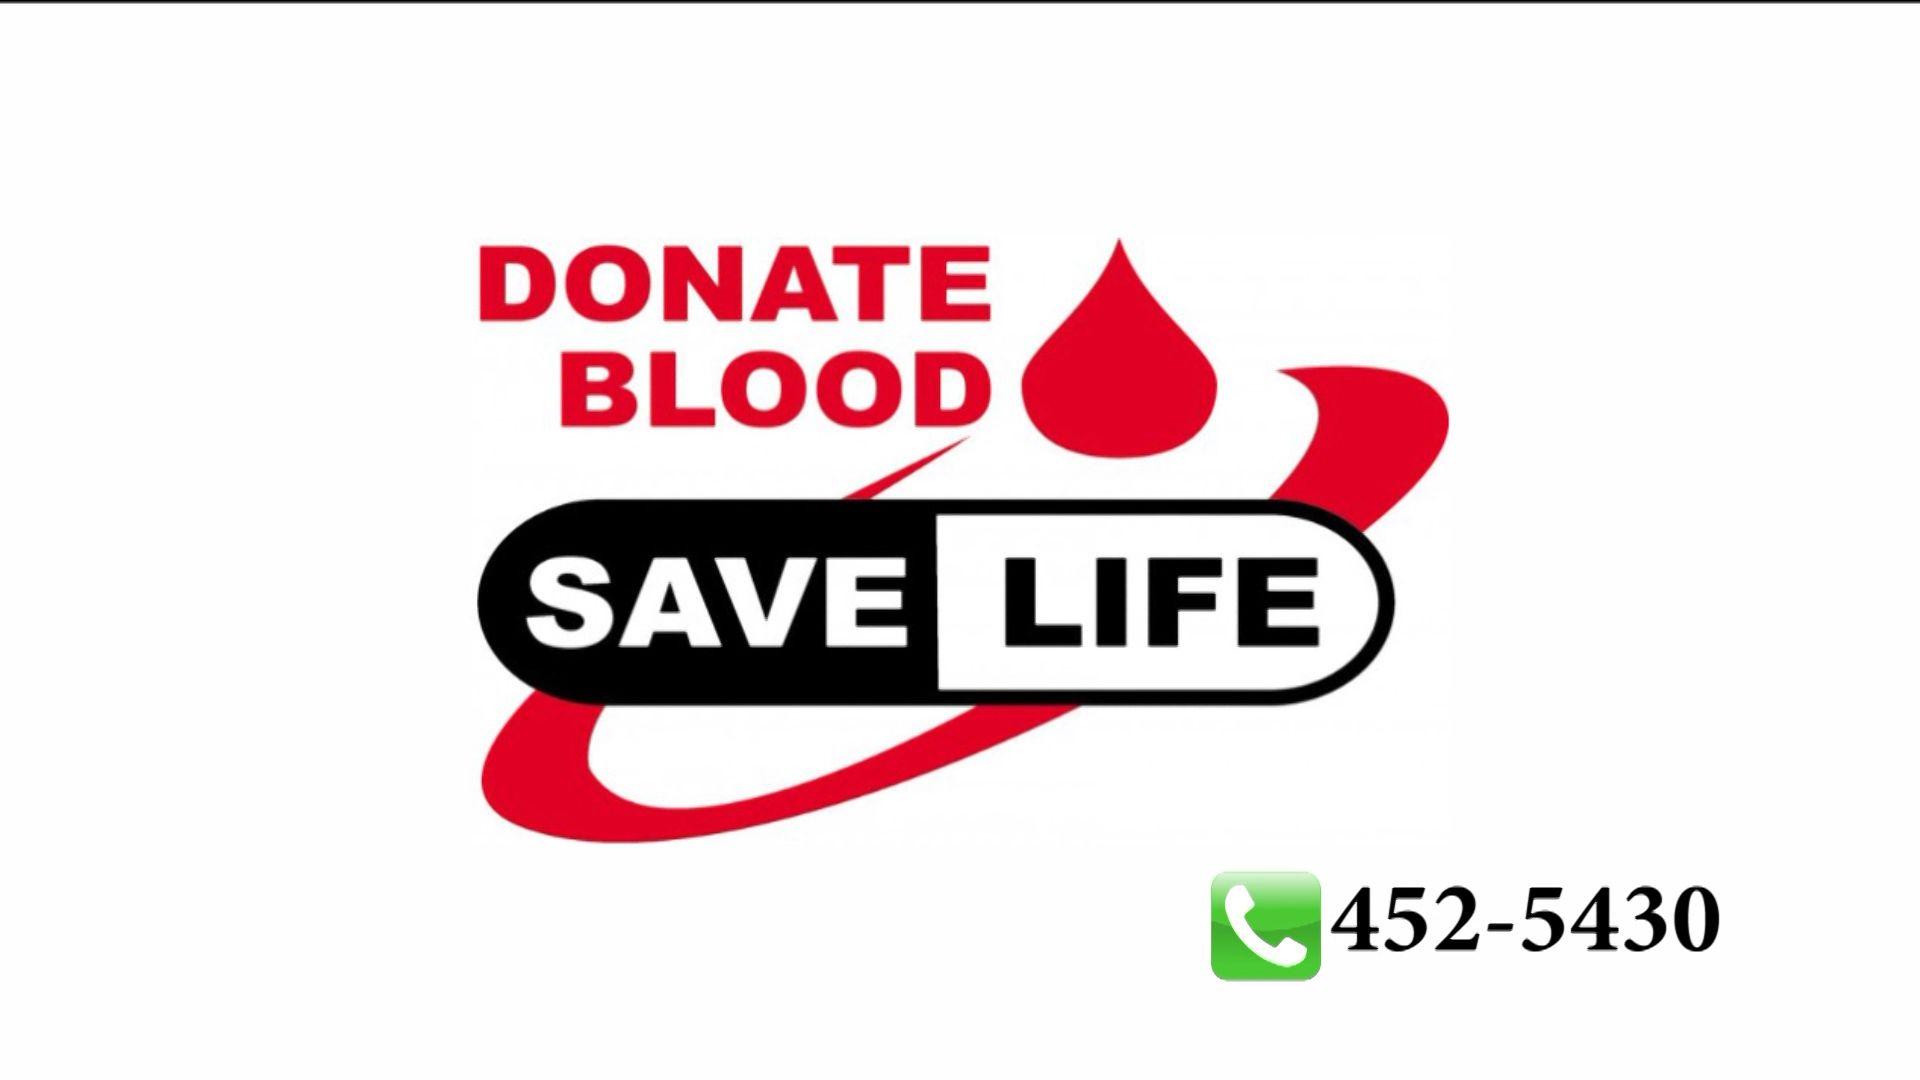 Donate Blood Save Life Logo - St. Lucia Blood Bank still 